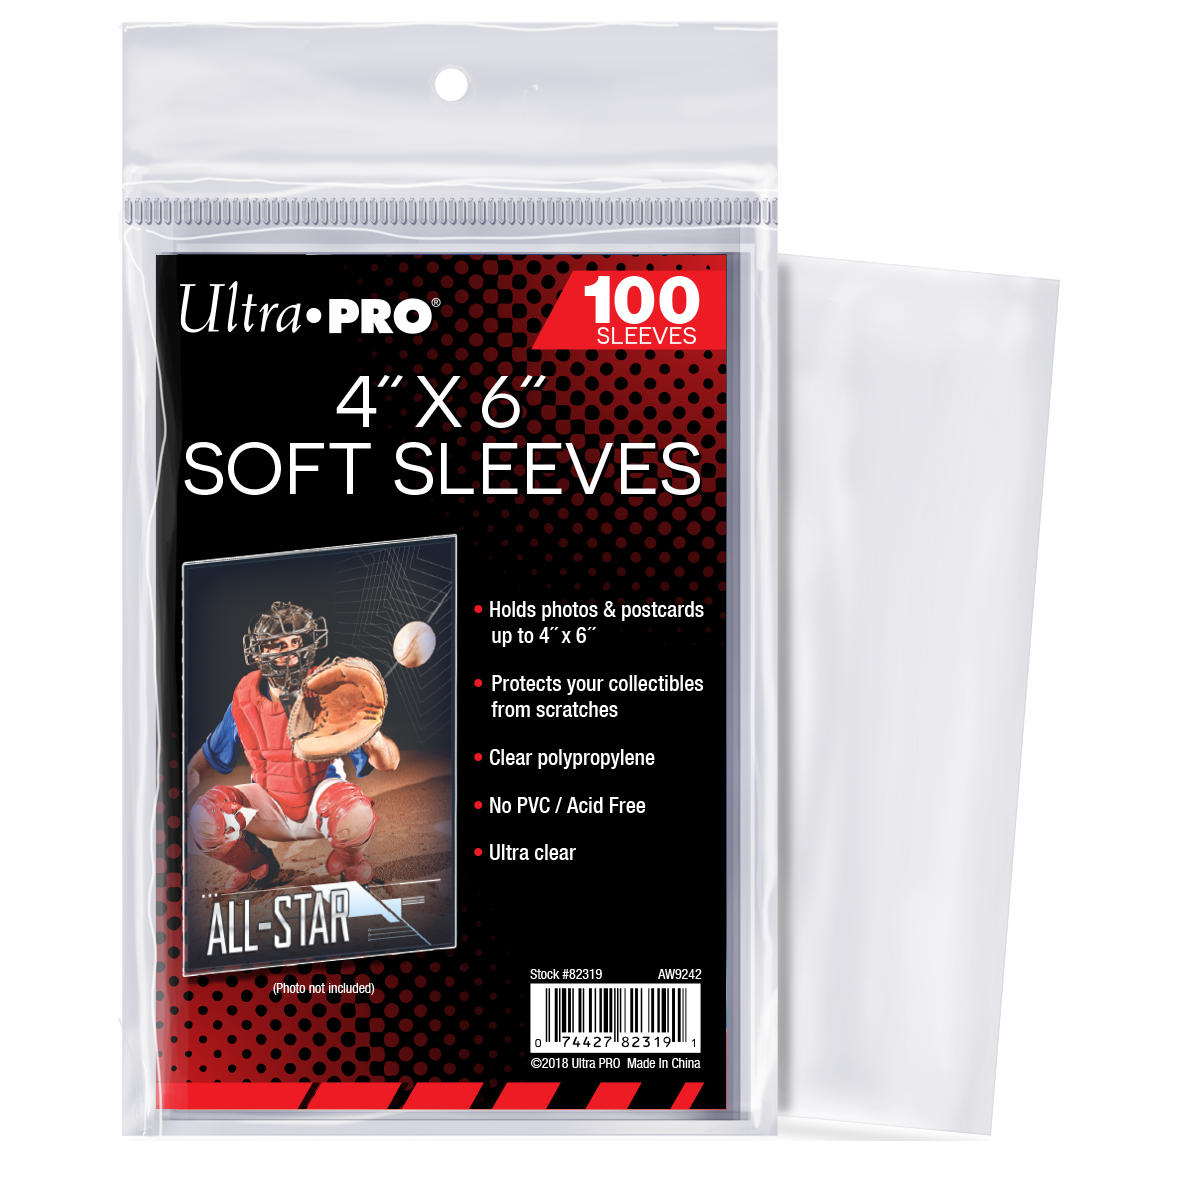 4" x 6" Soft Sleeves (100ct) | Ultra PRO International